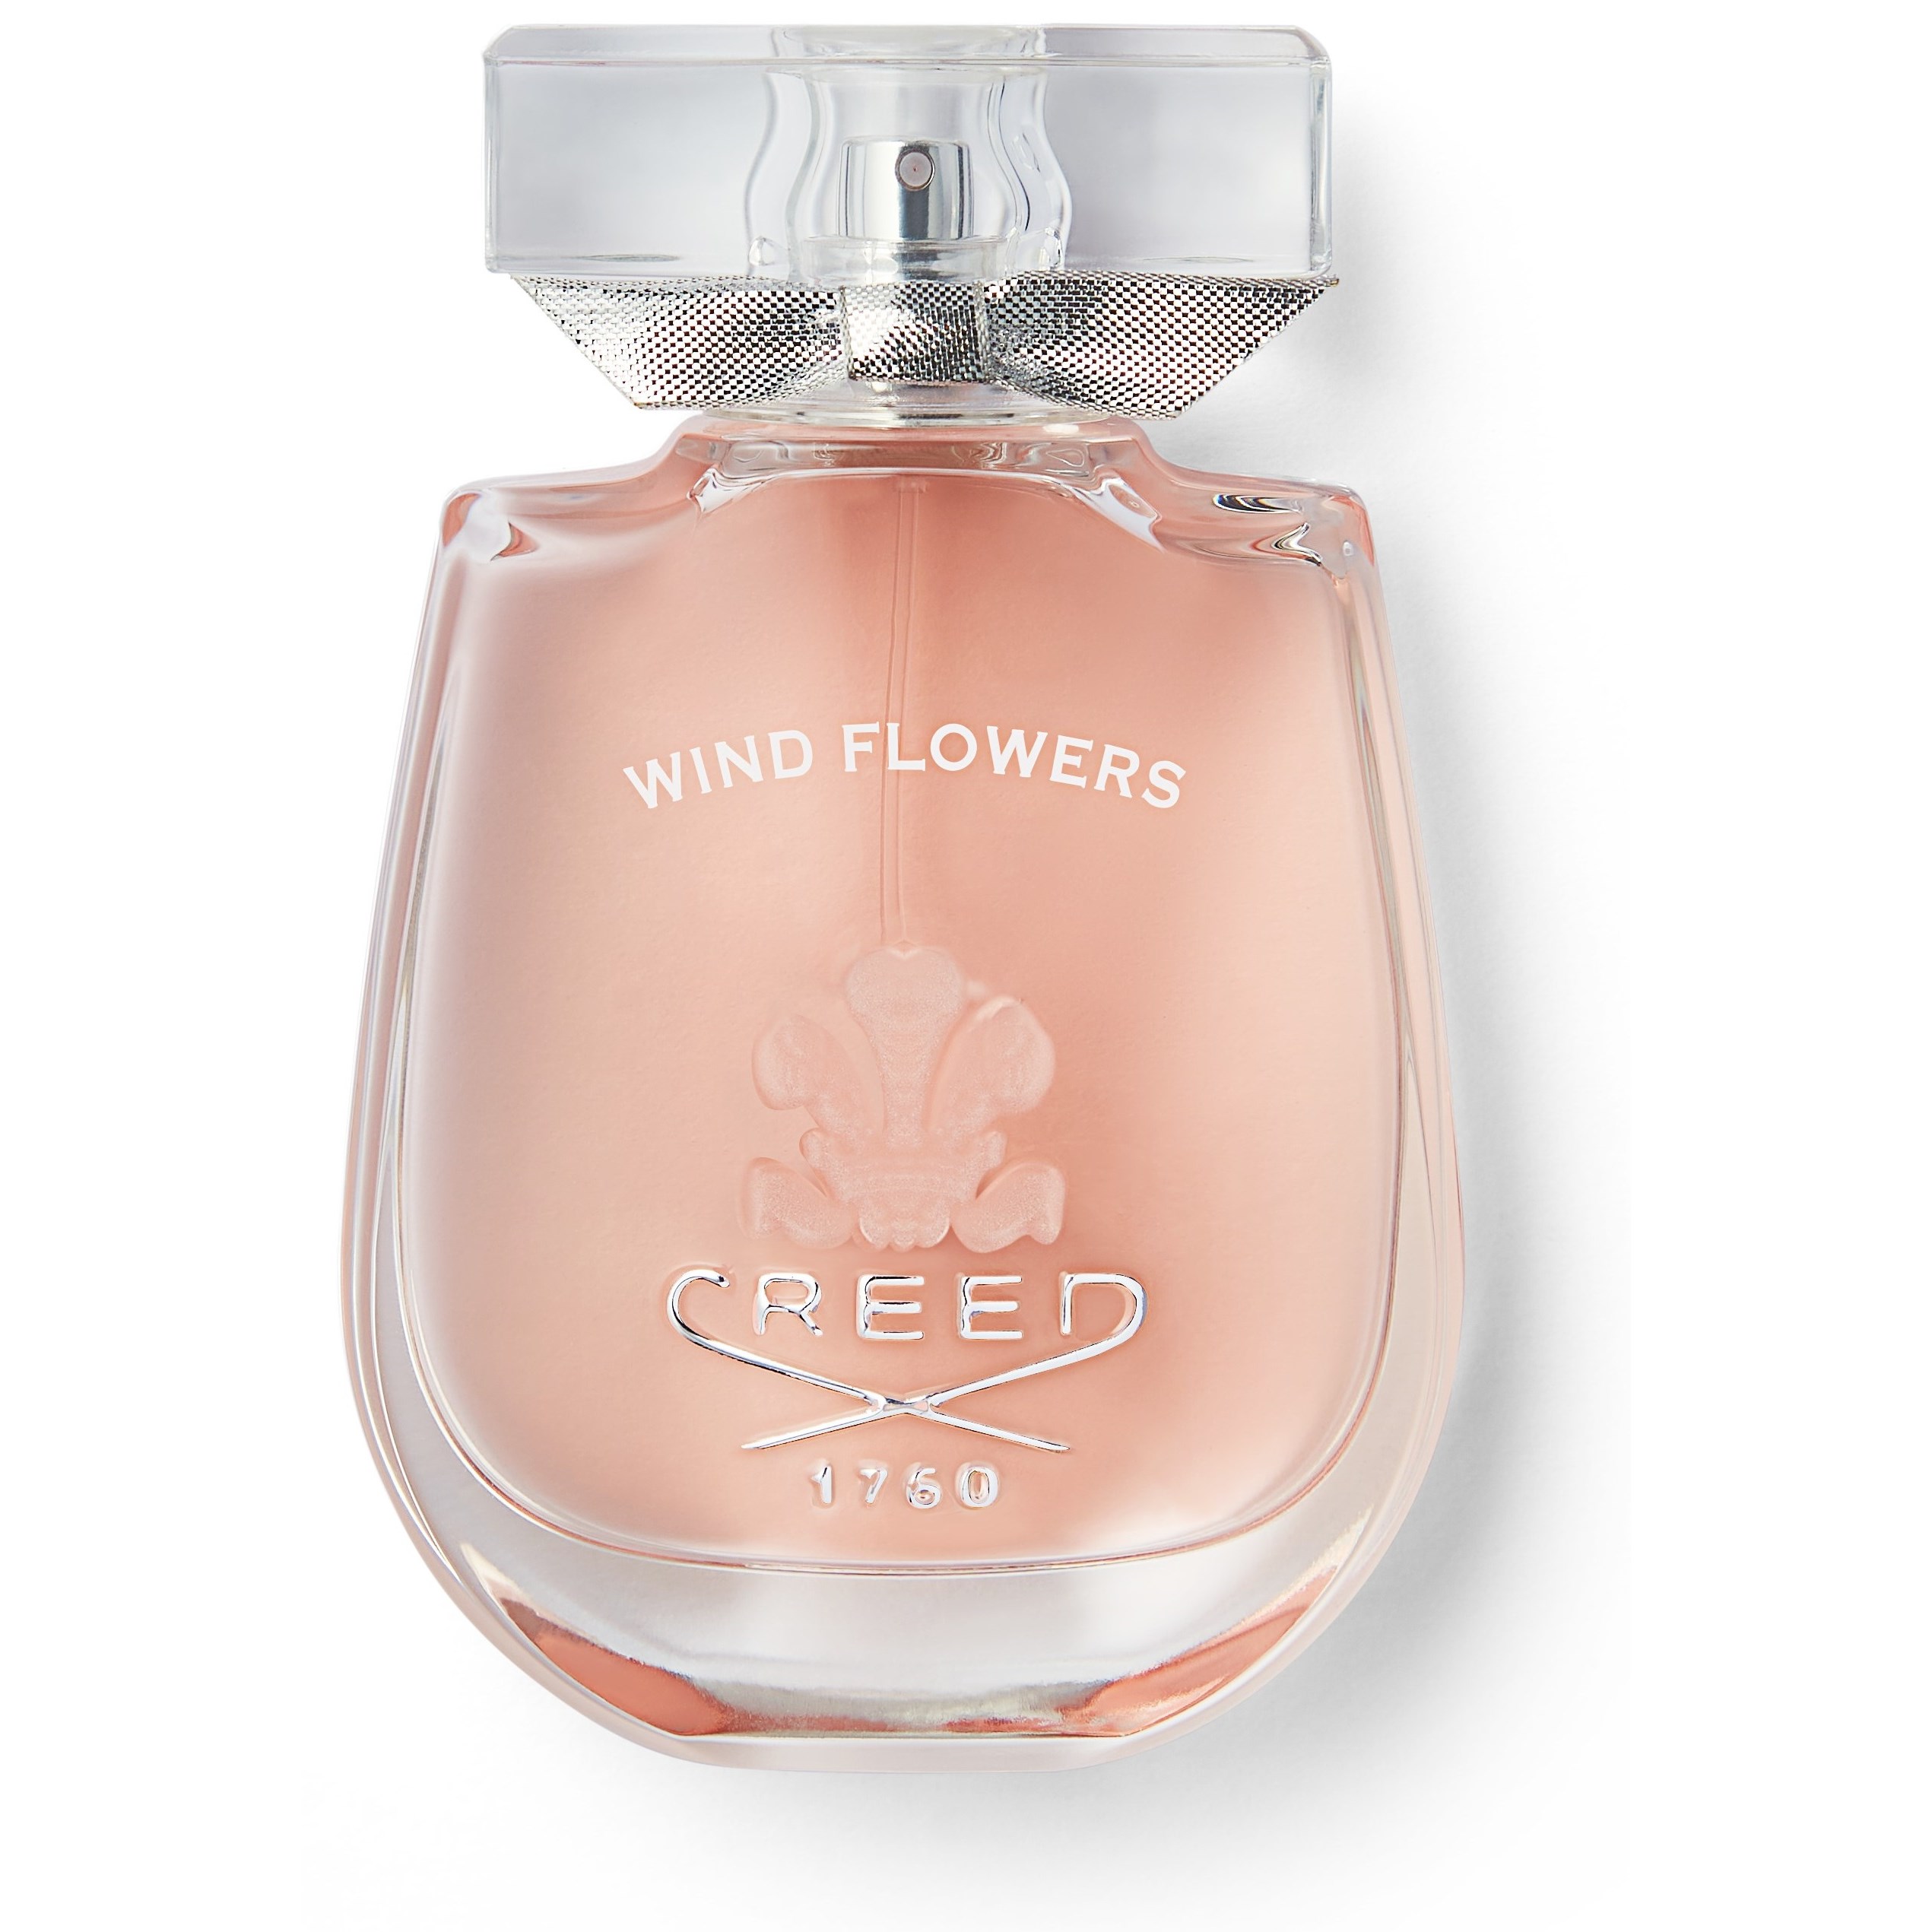 Creed Wind Flowers 75 ml